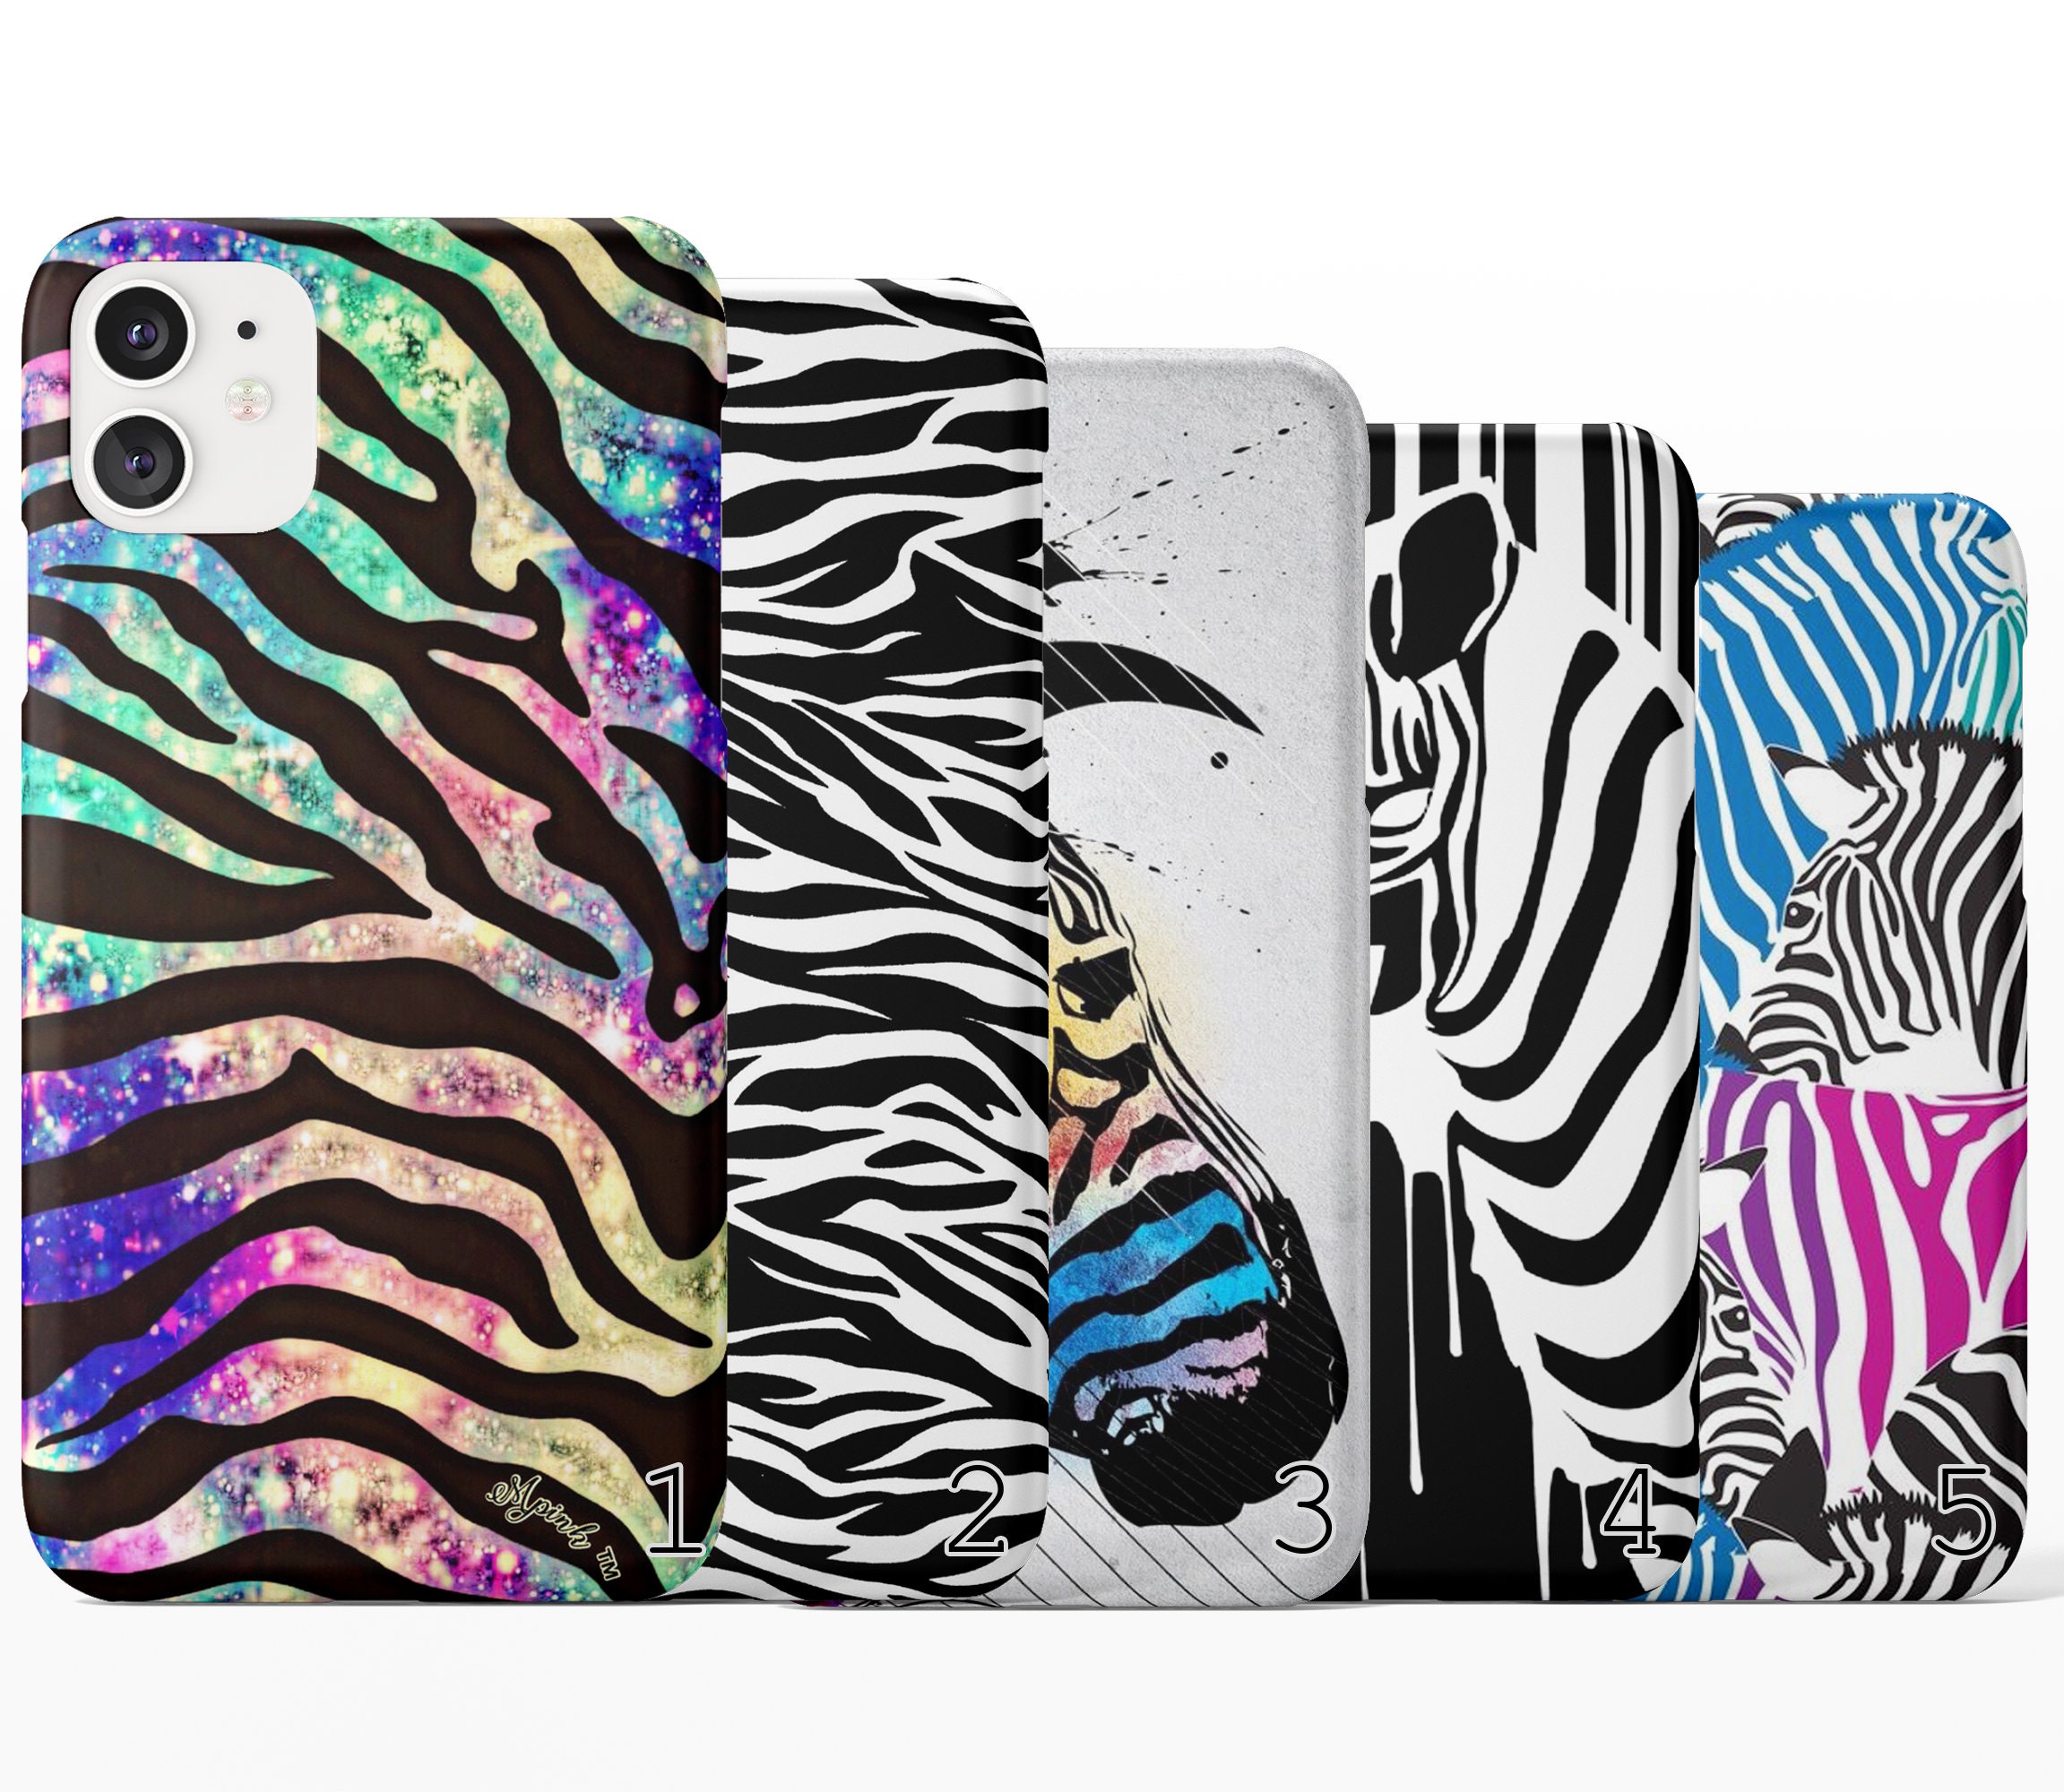 Minotaur iPhone case 12 Pro Max Mini 11 Xr X Xs Max 8 Plus 7 6s se Samsung galaxy S21 Ultra S20 5G Fe s10e s10 s9 Note 20 plastic animal